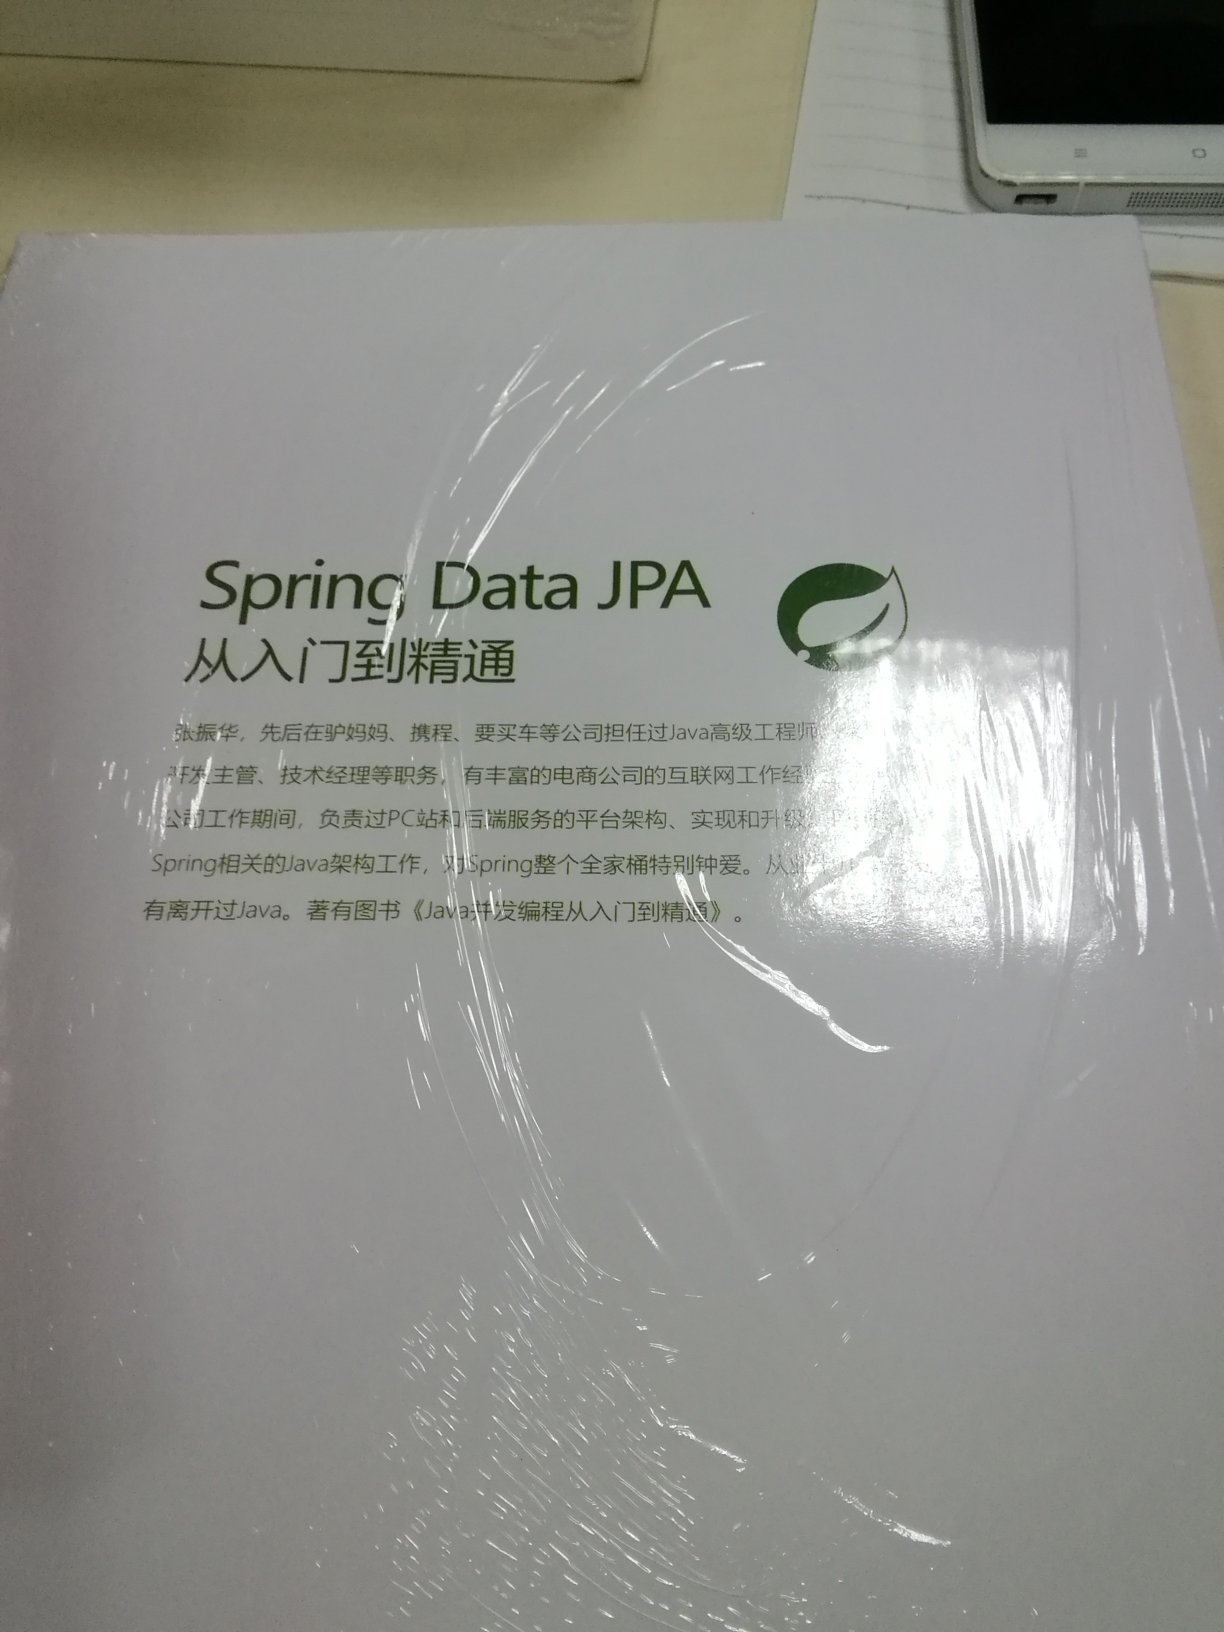 spring data jpa 学习学习先！